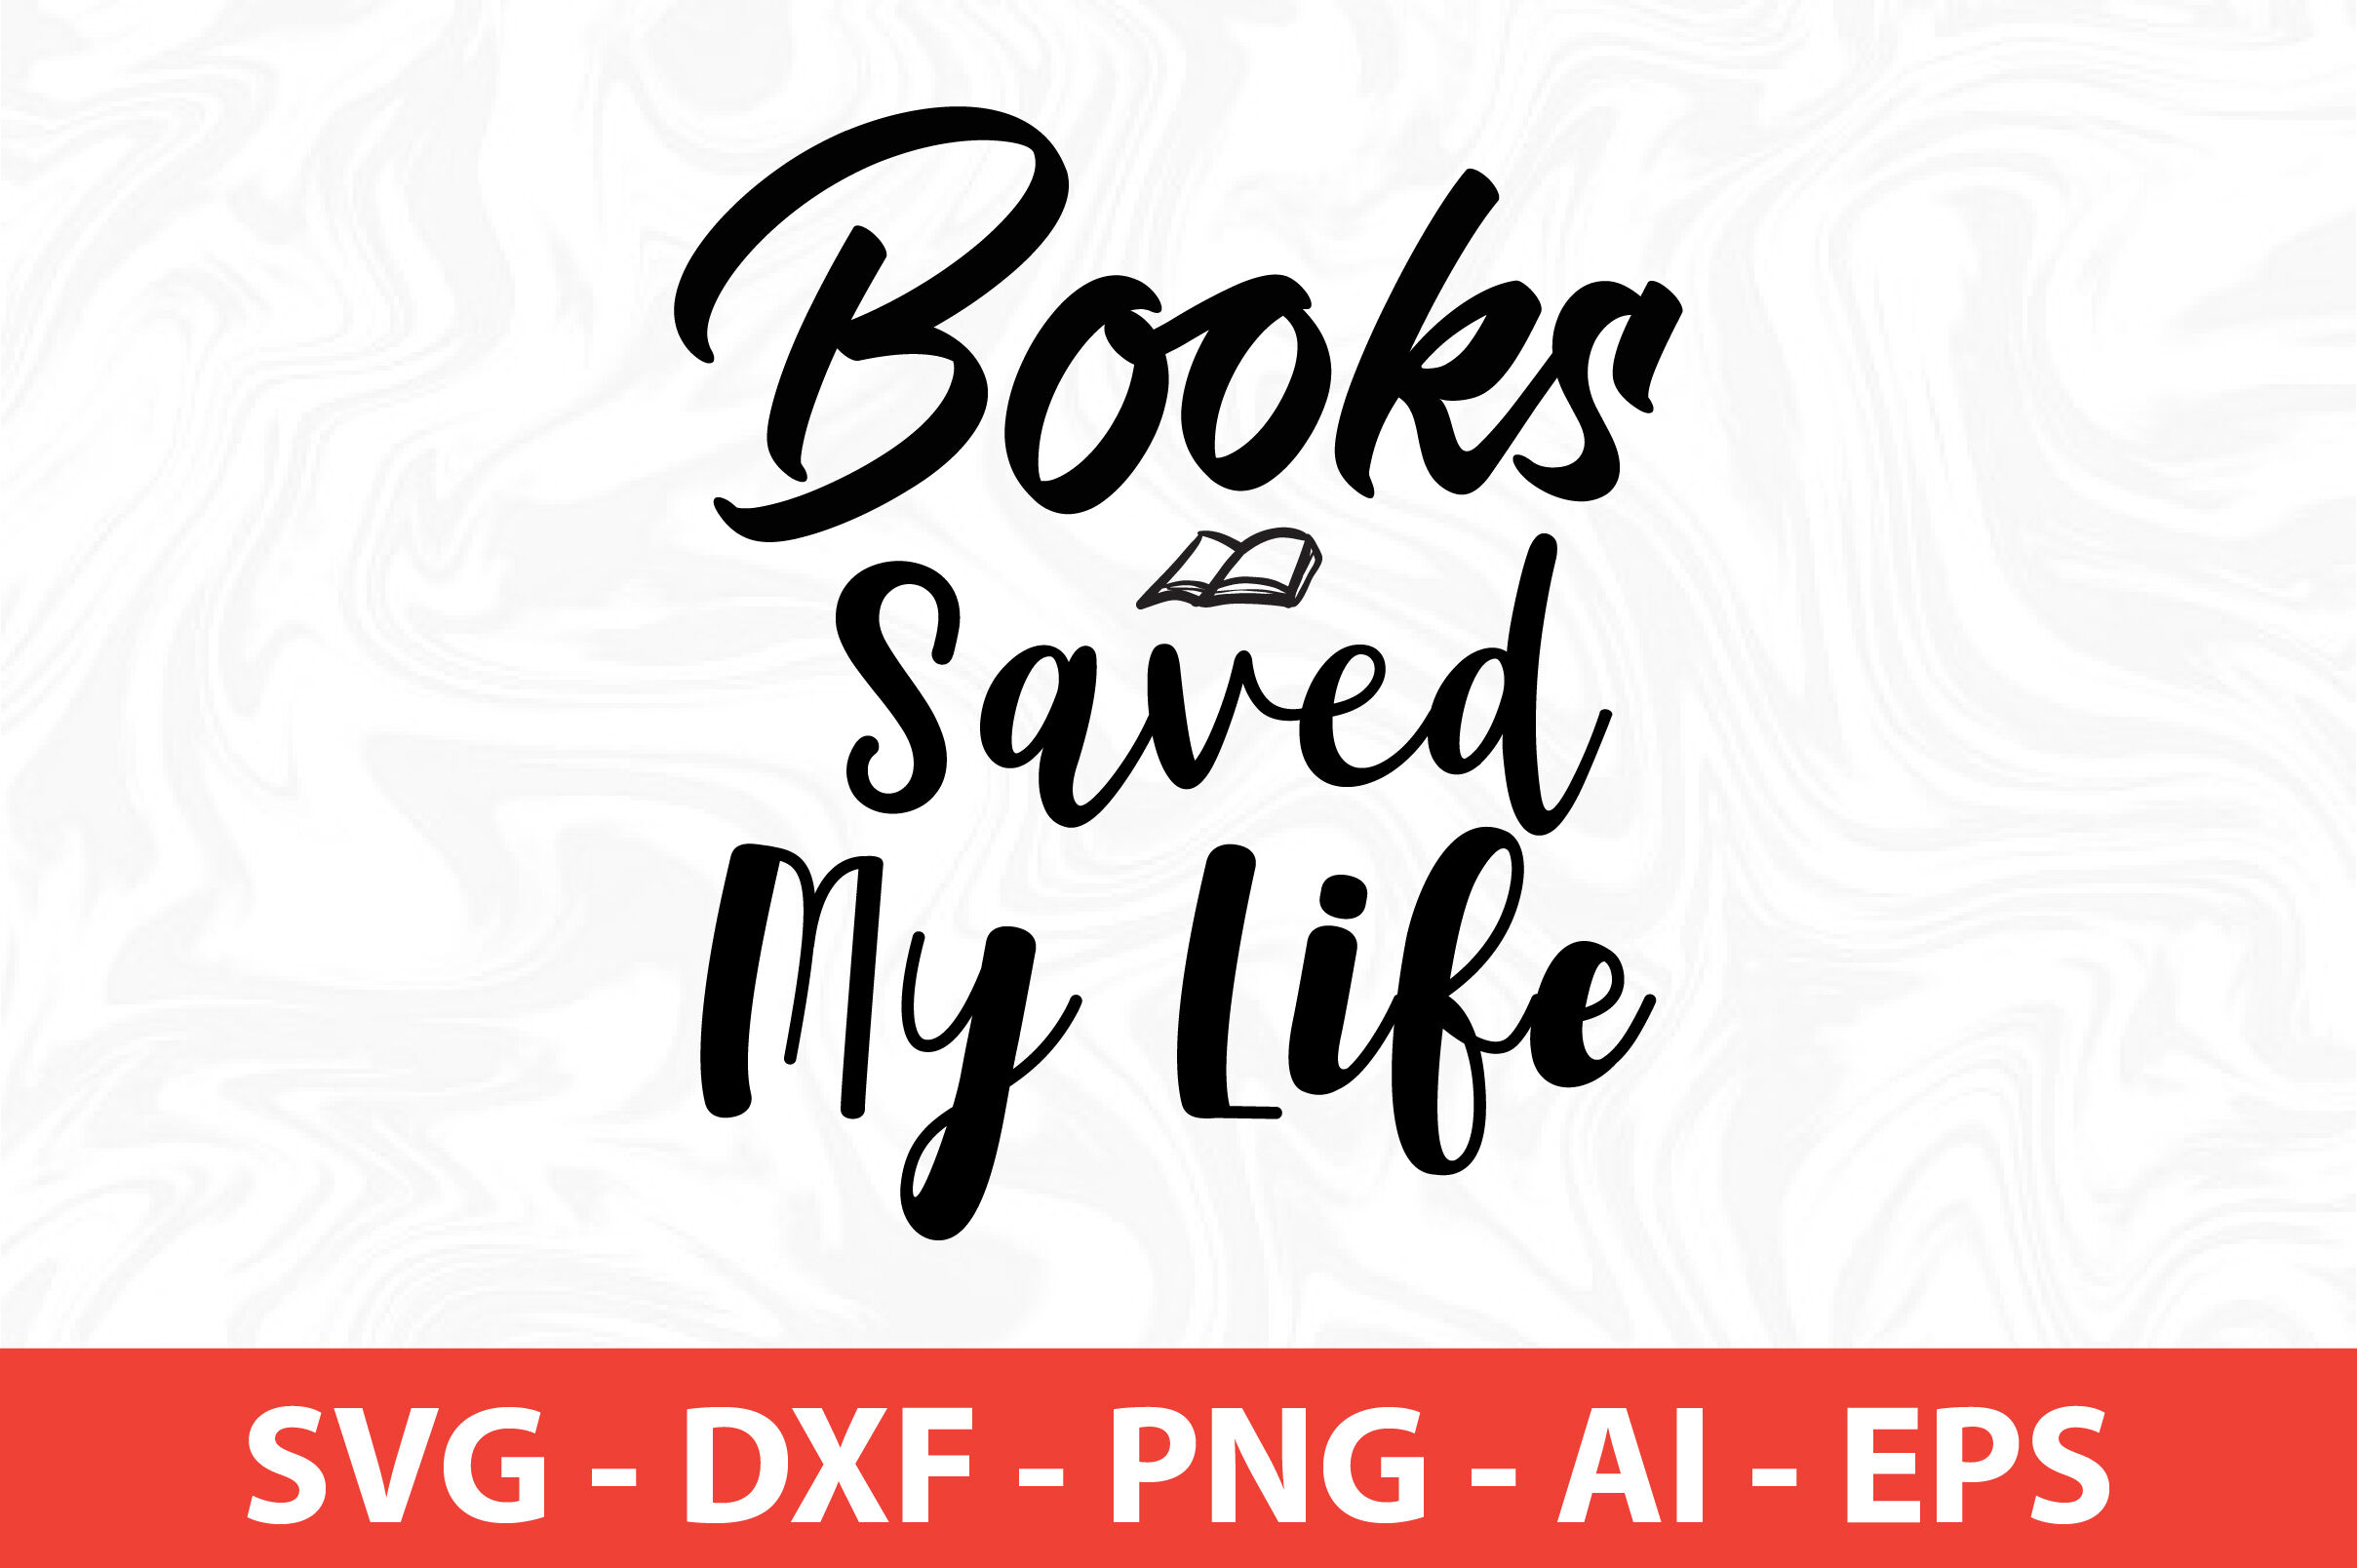 Books Saved My Life Svg Cut File By Orpitaroy Thehungryjpeg